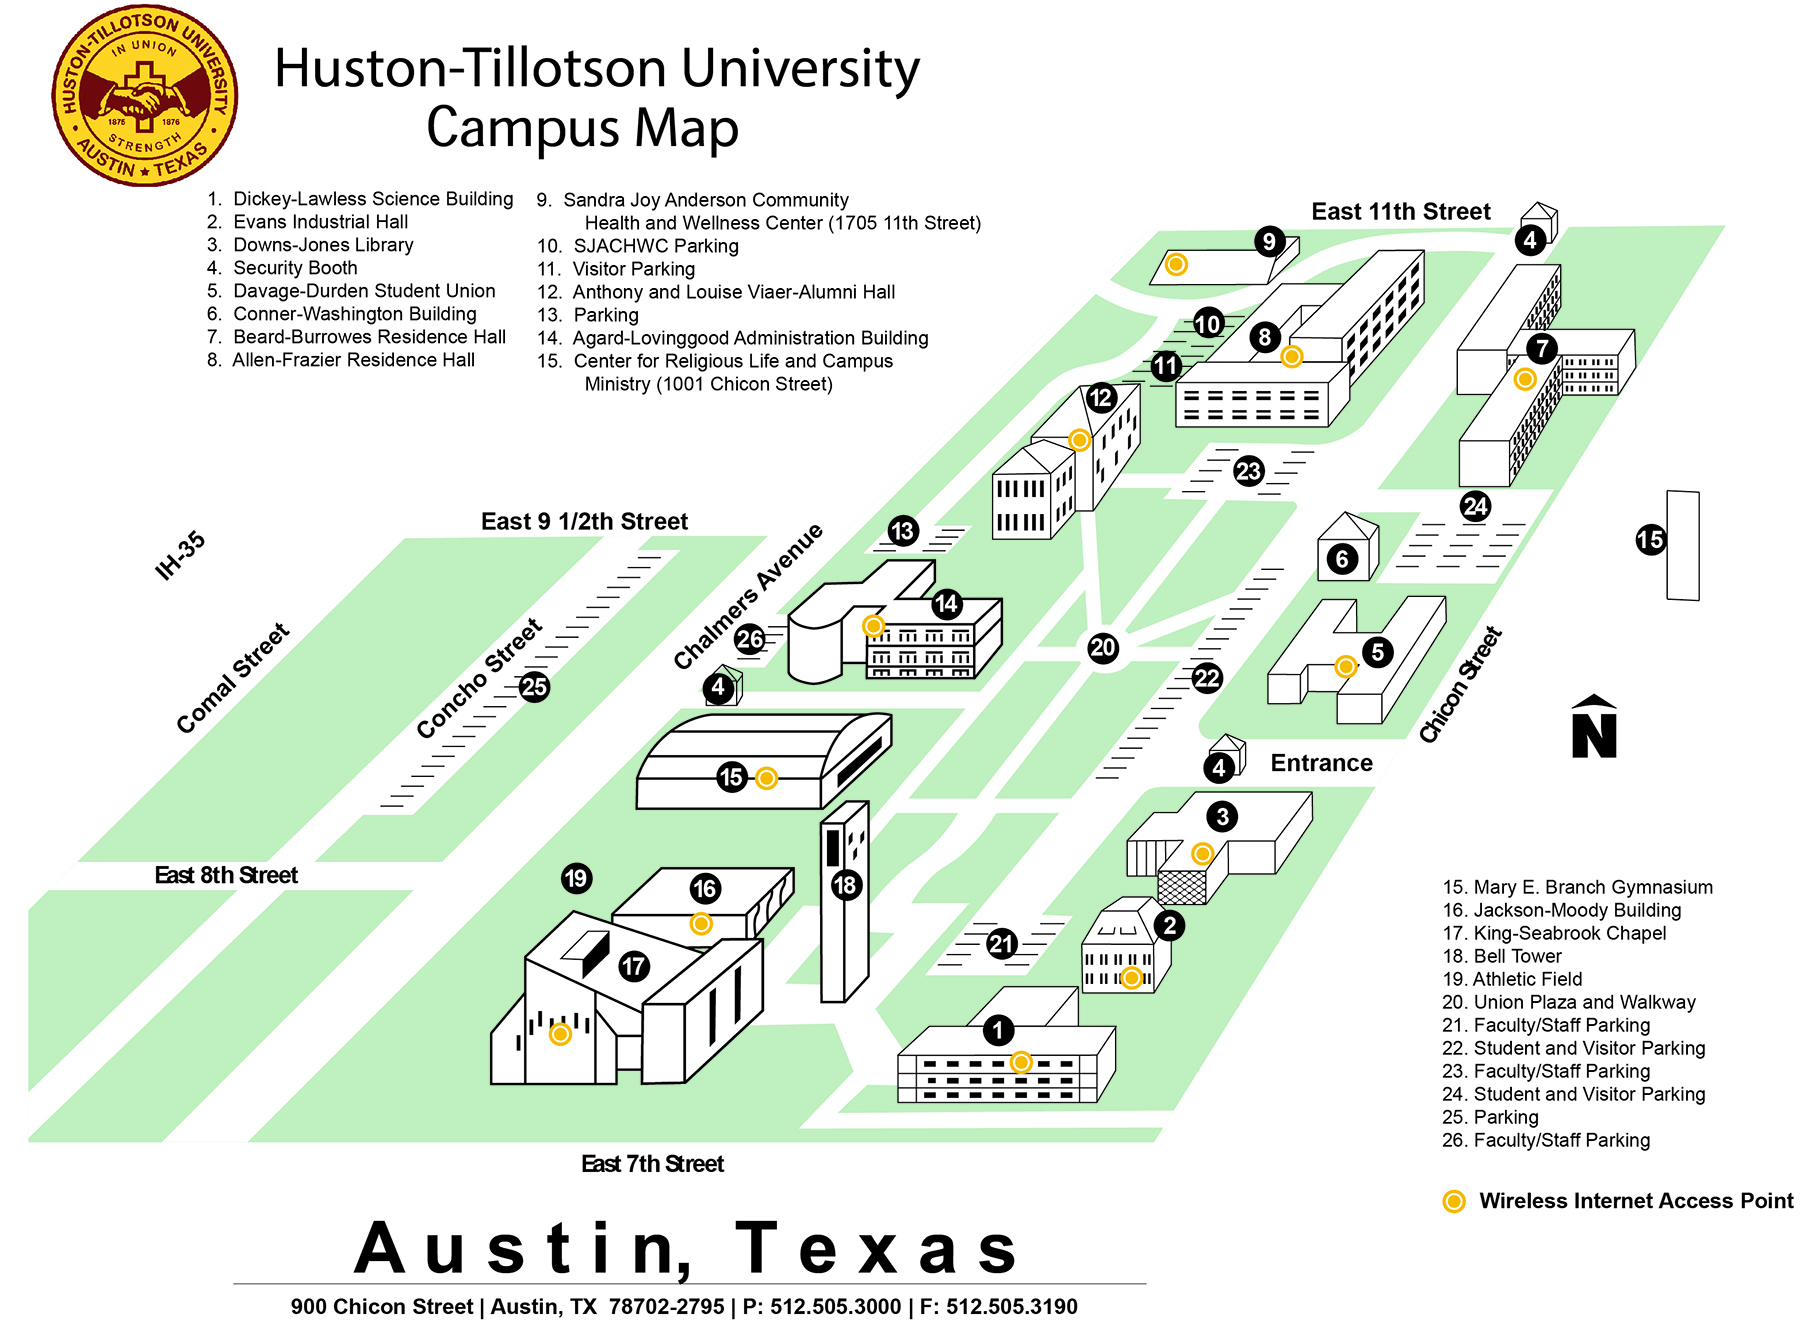 HT Campus Map